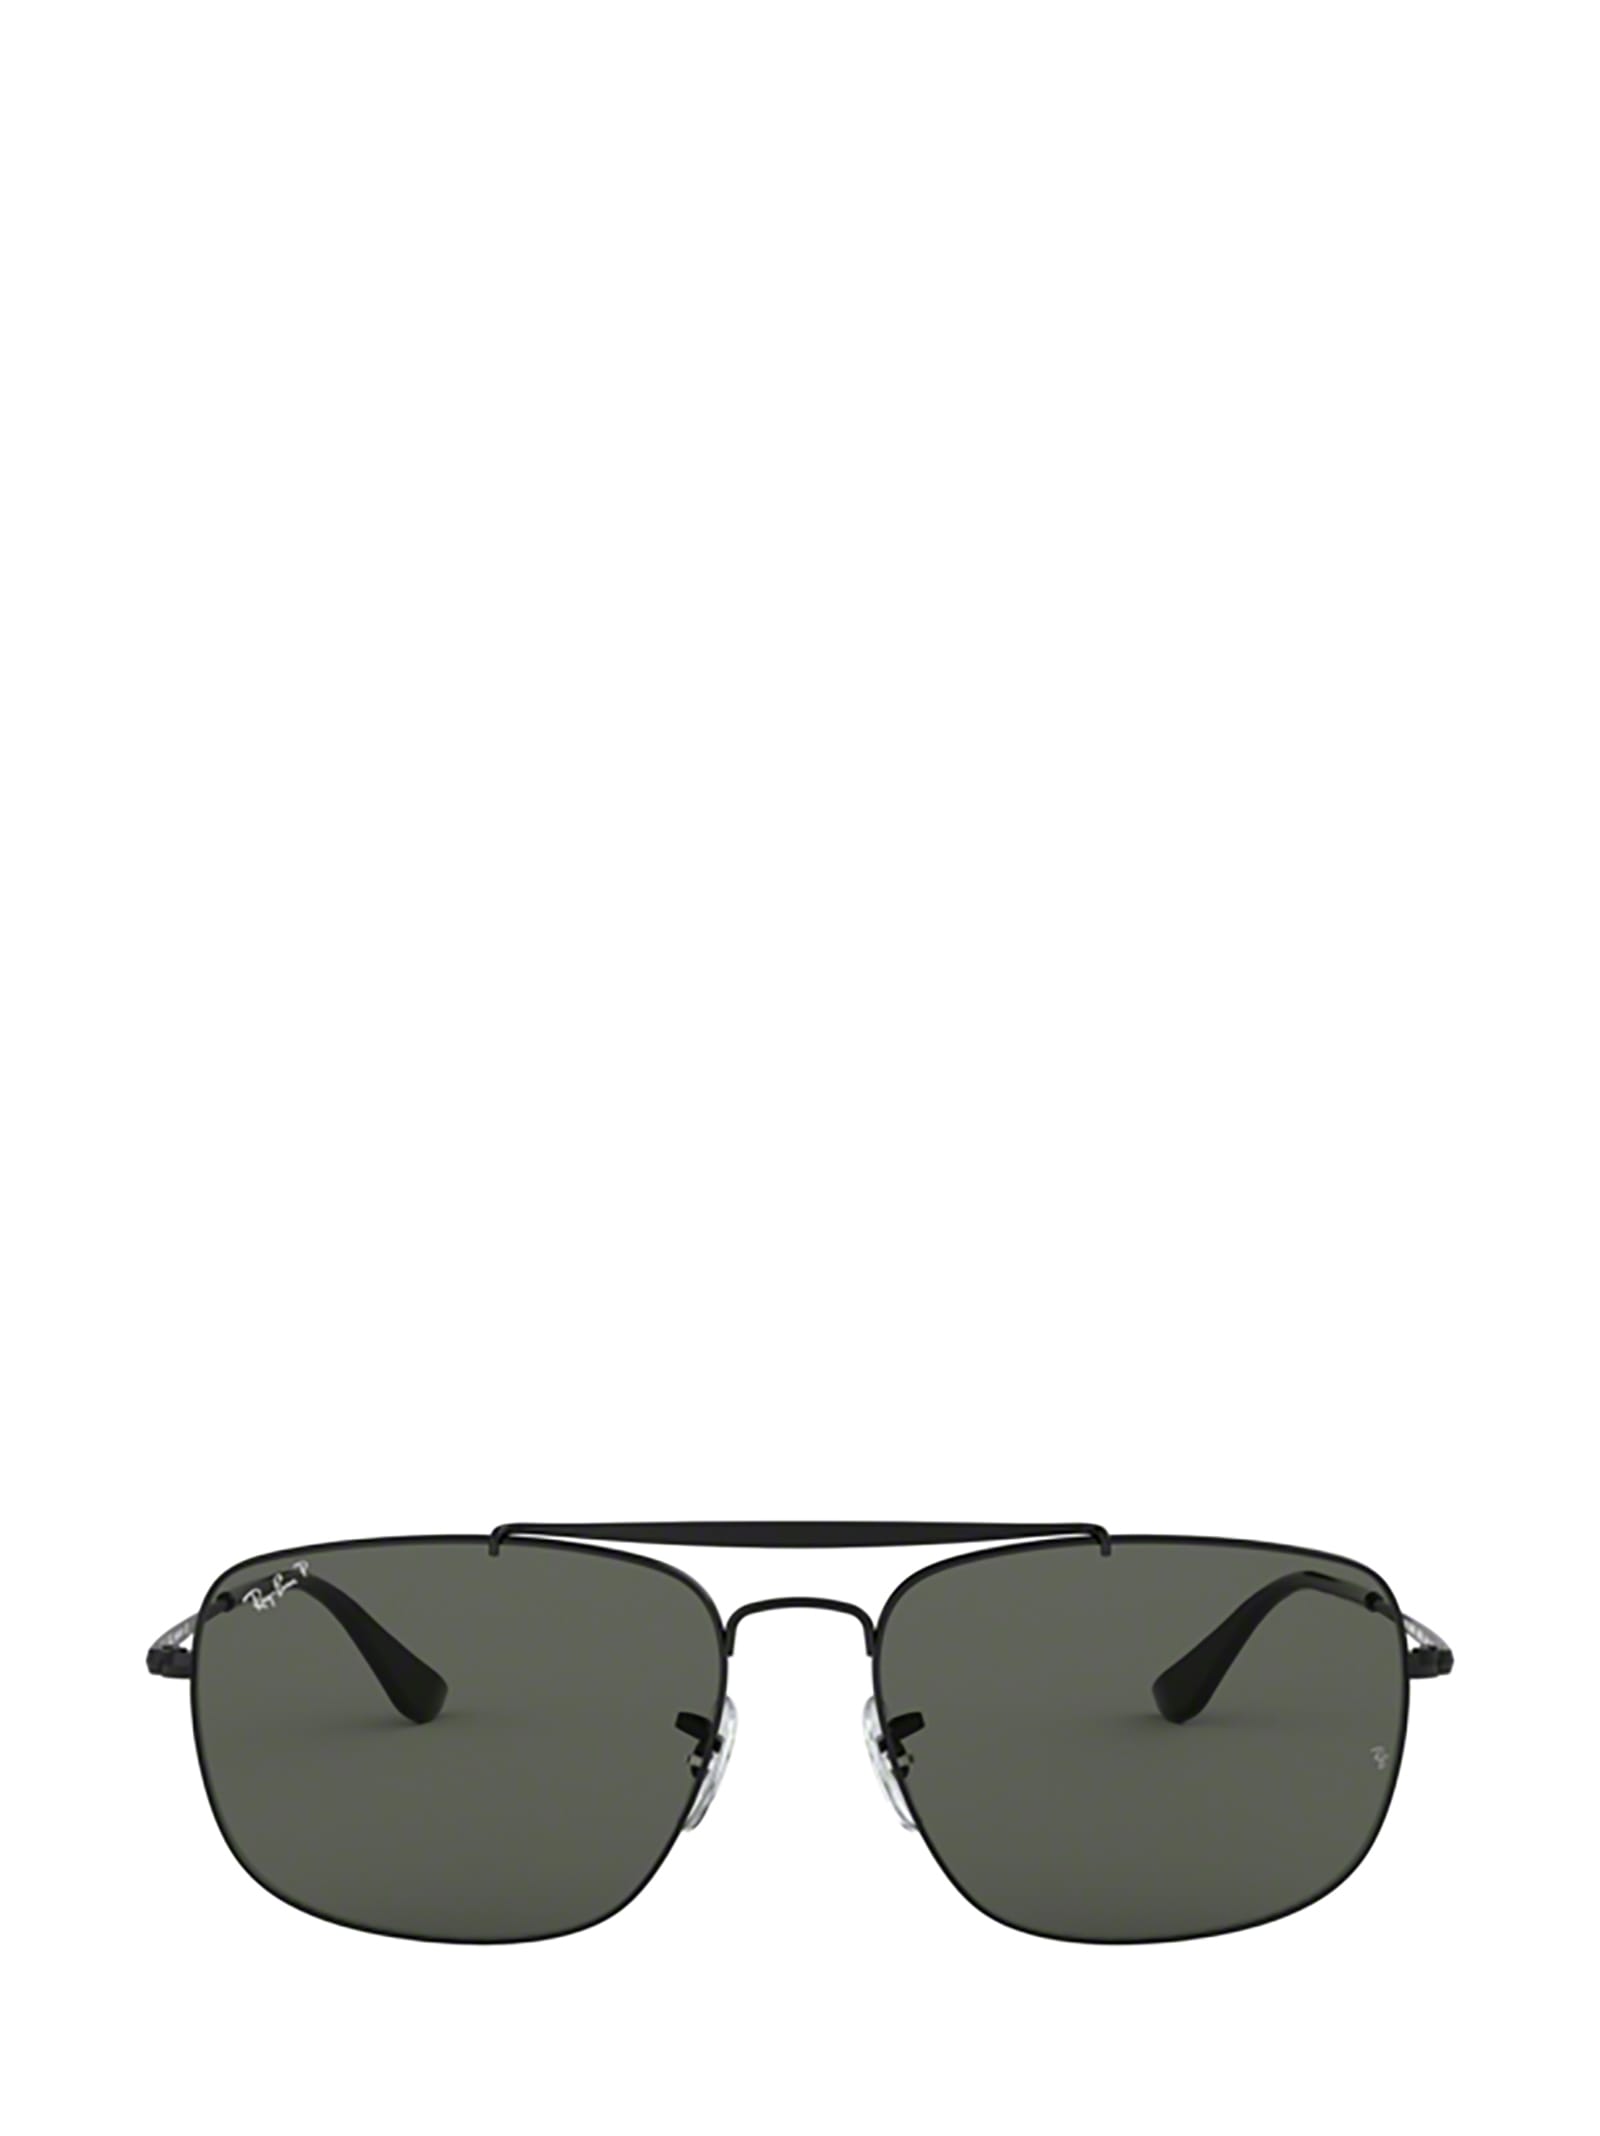 Ray-Ban Ray-ban Rb3560 Black Sunglasses